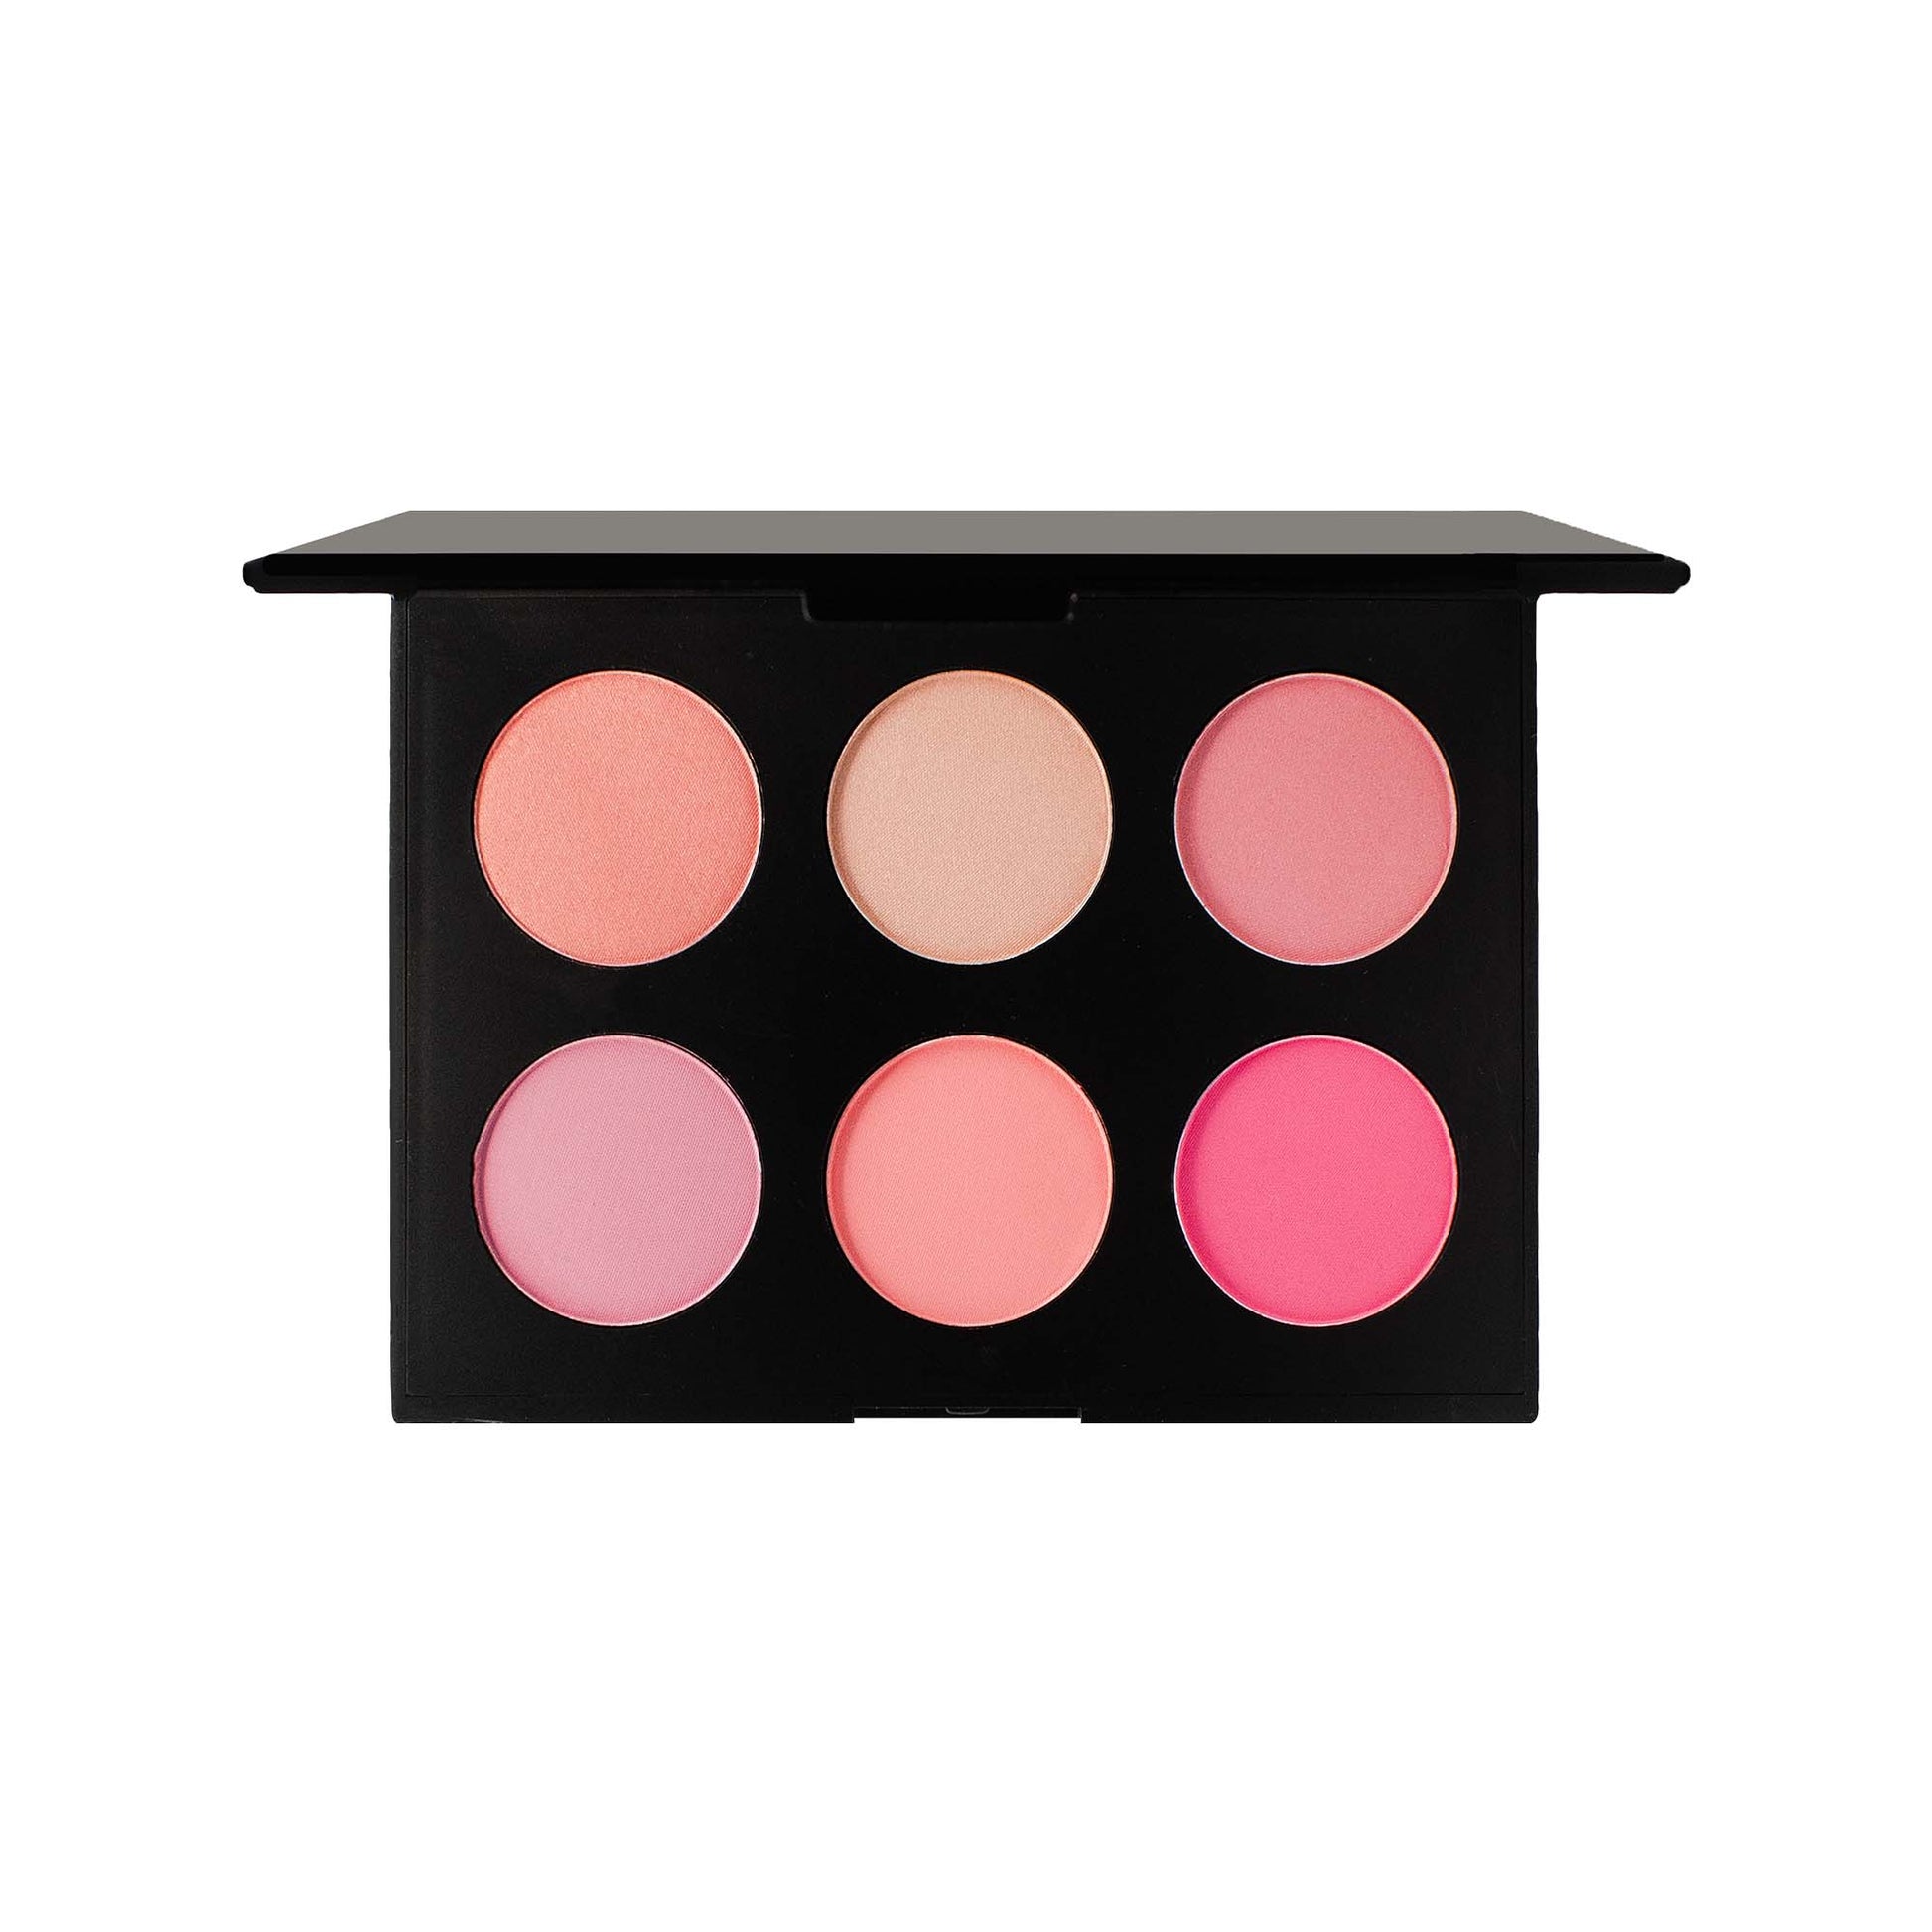 NARS pink blush in Desire / New in Box